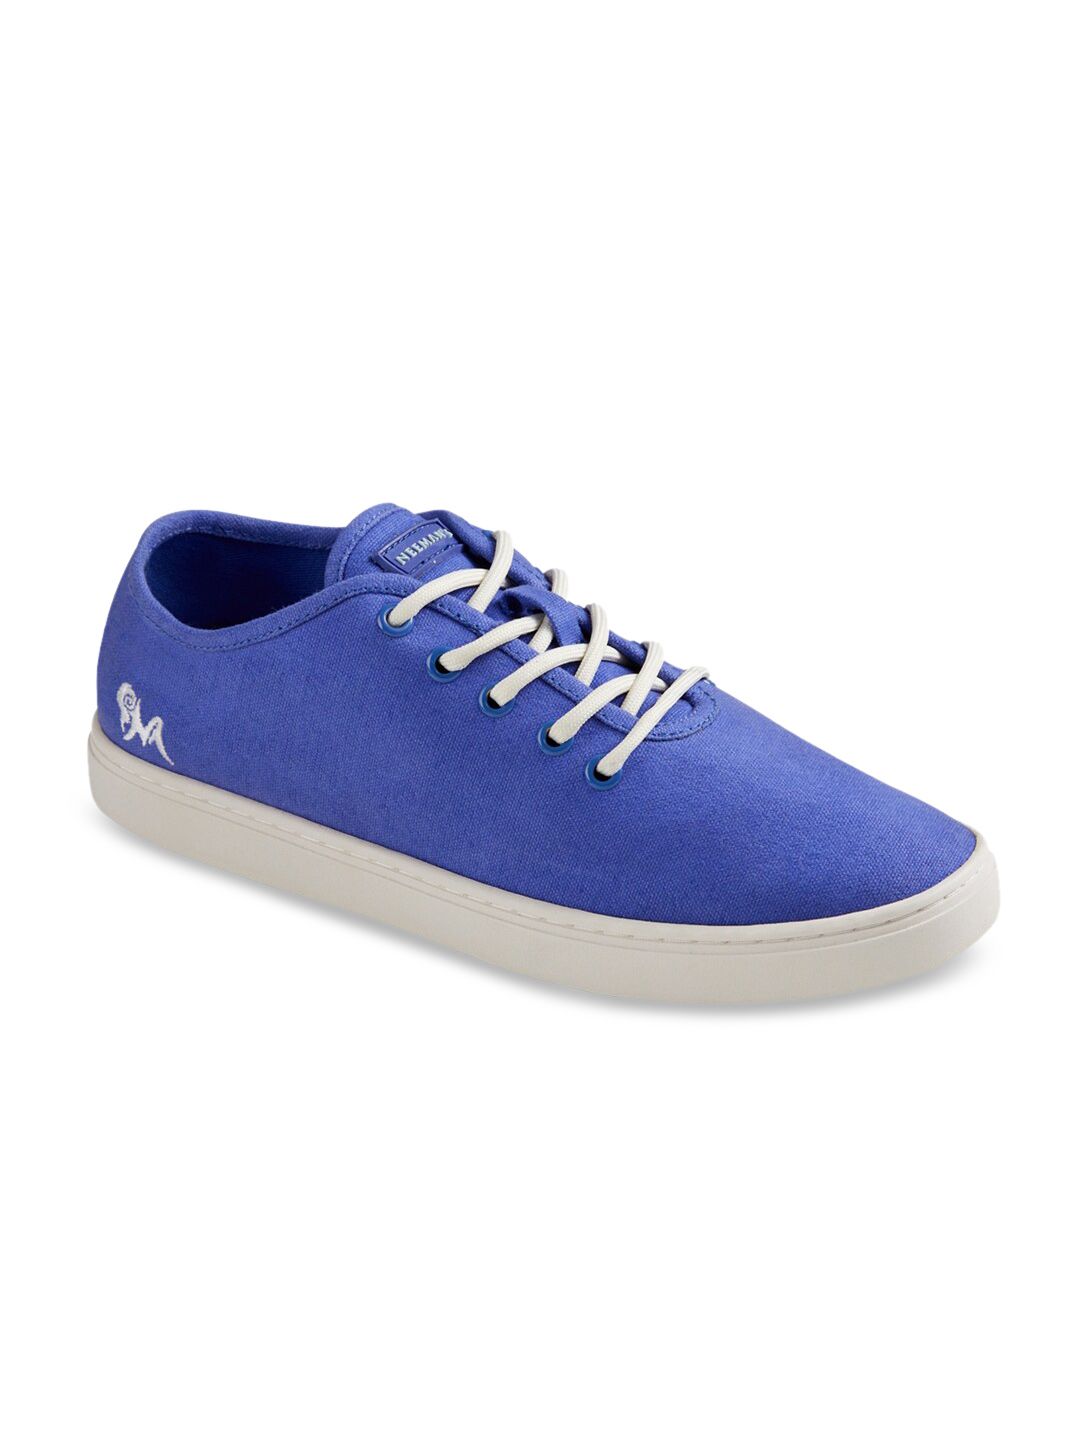 NEEMANS Unisex Blue Sneakers Price in India